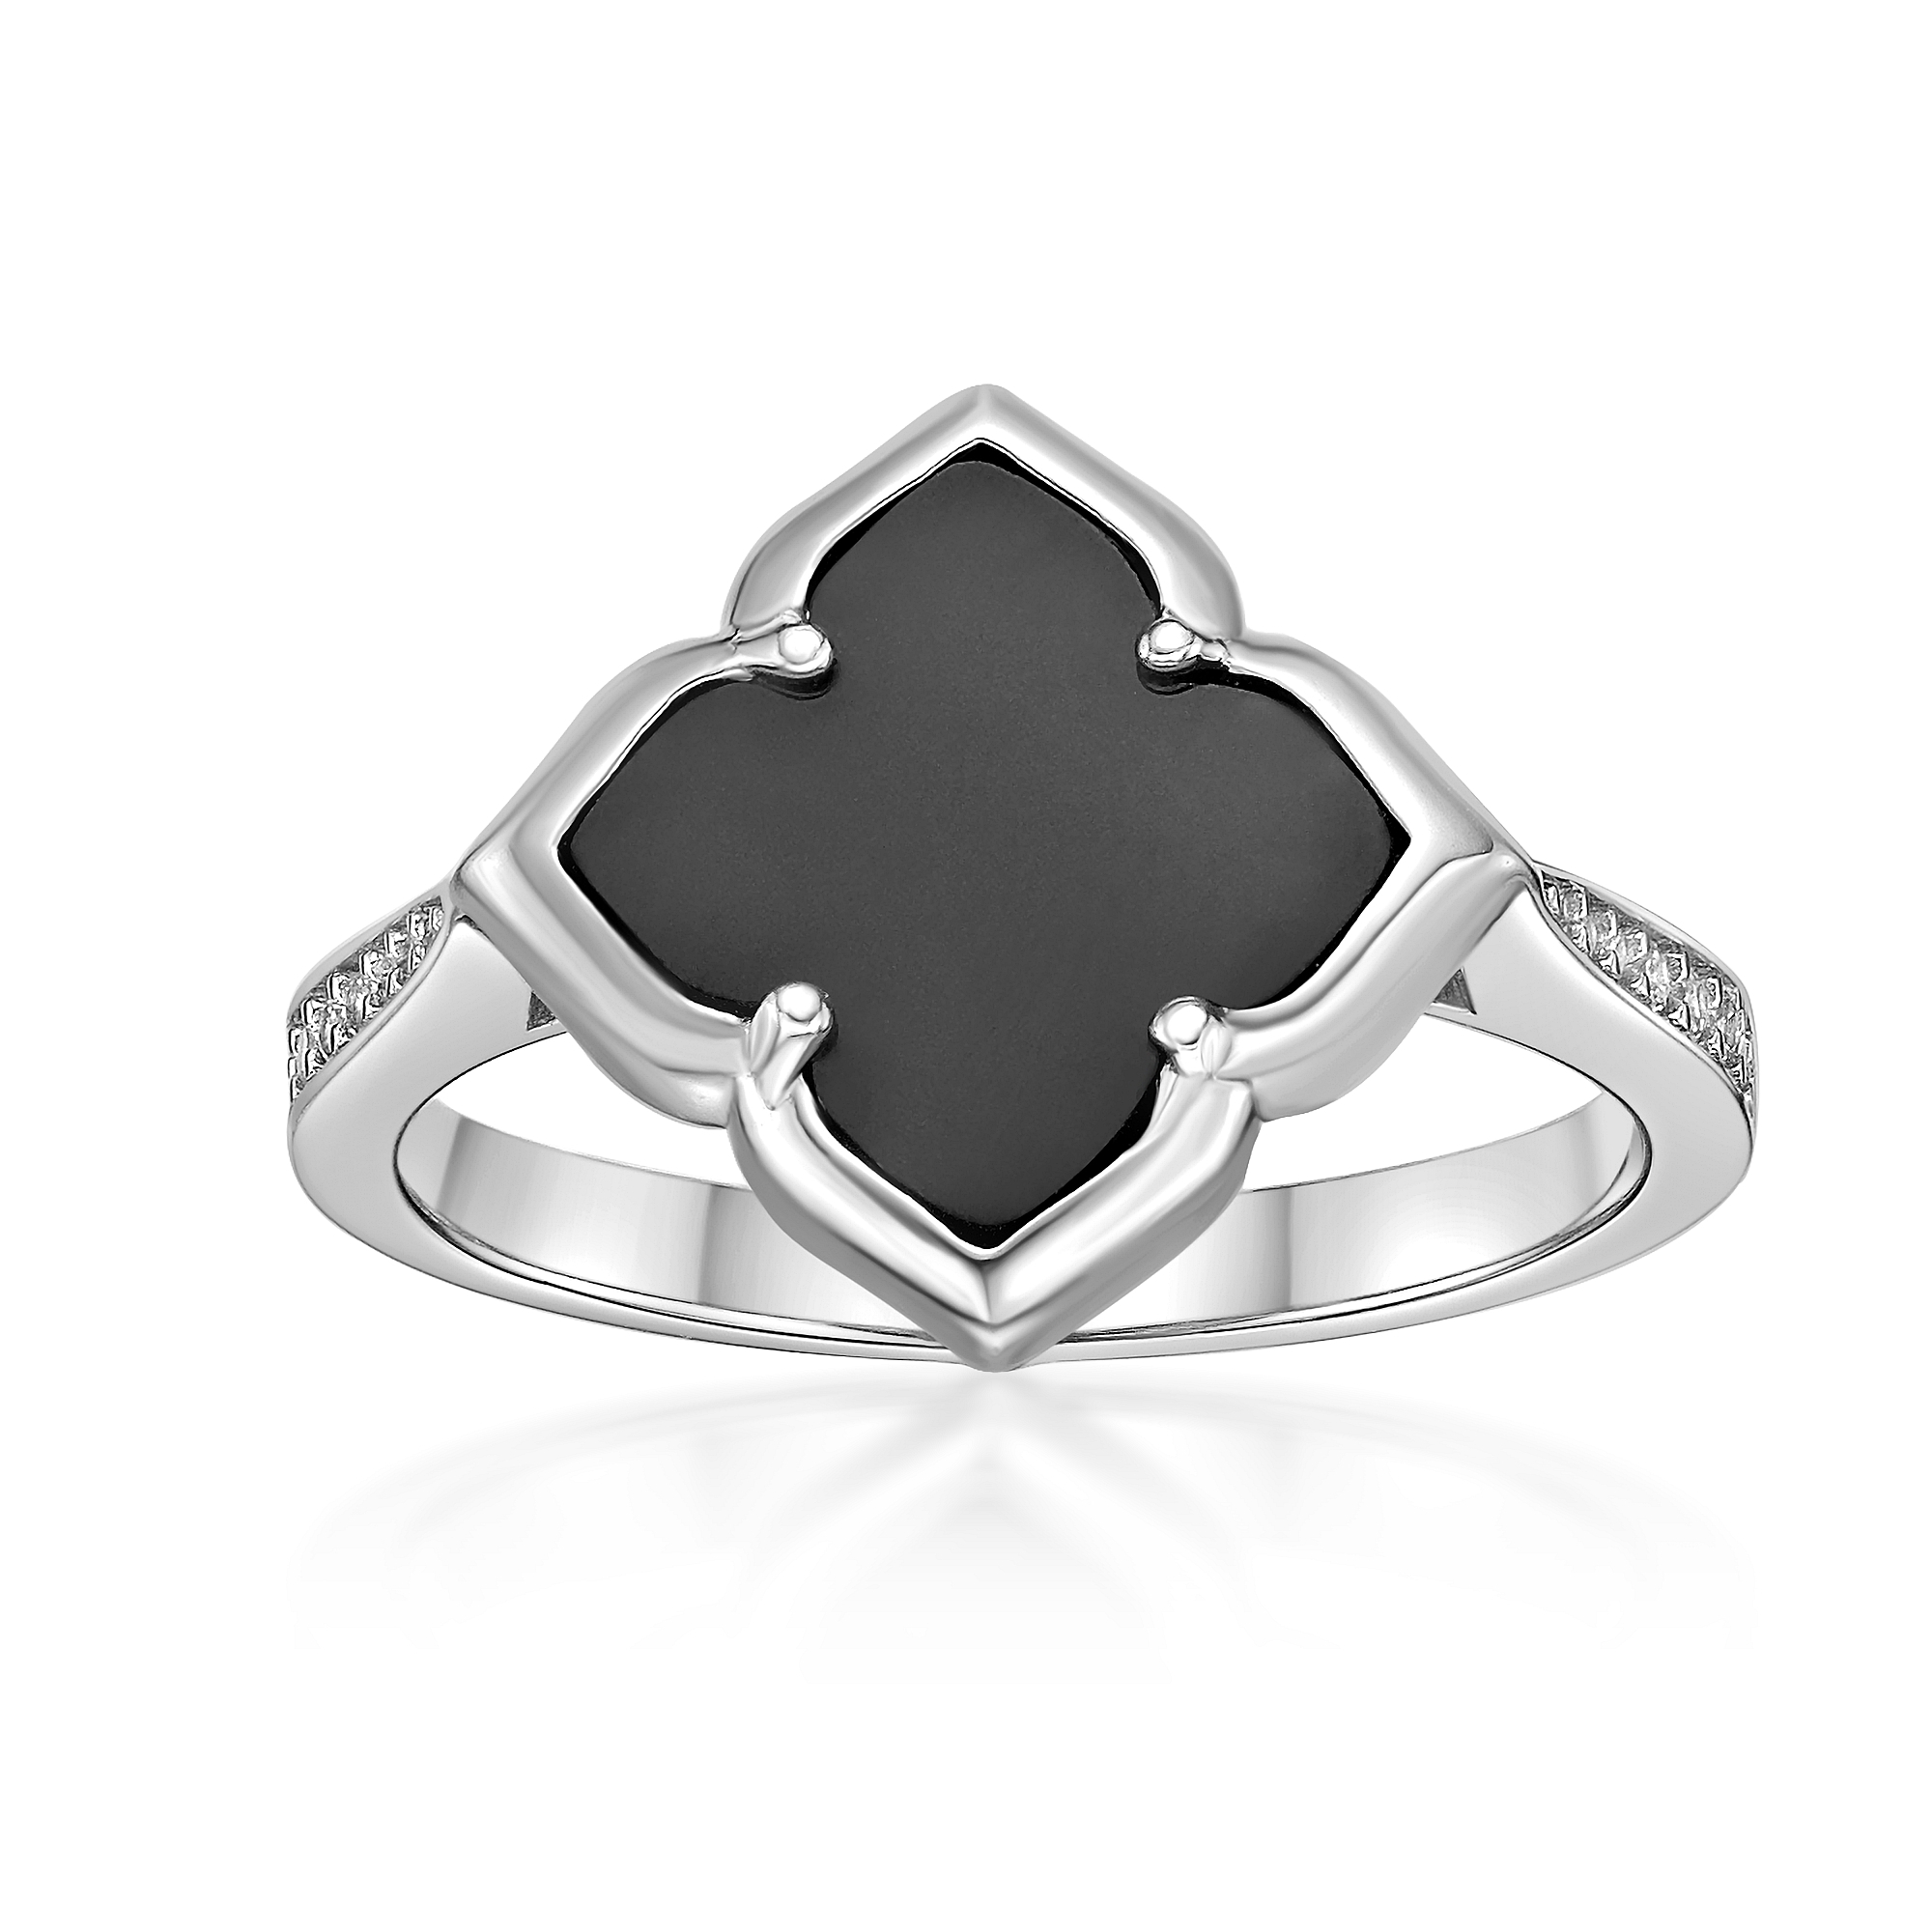 52193-ring-flora-sterling-silver-52193-3-1.jpg